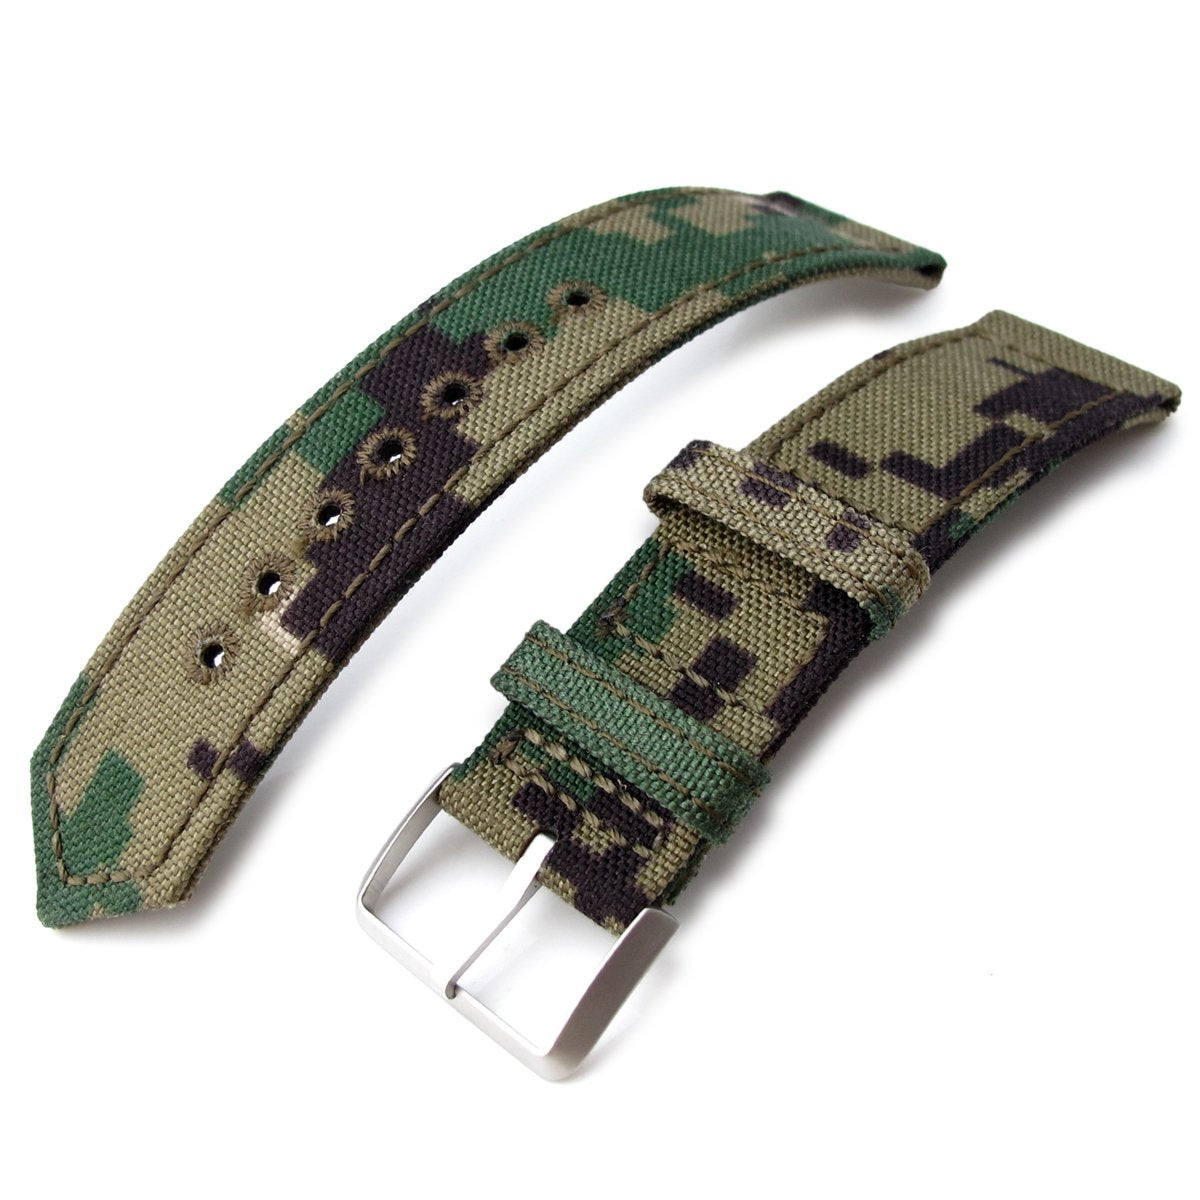 20mm 21mm or 22mm MiLTAT WW2 2-piece Woodland Camo Cordura 1000D Watch Band with lockstitch round hole Sandblasted Strapcode Watch Bands